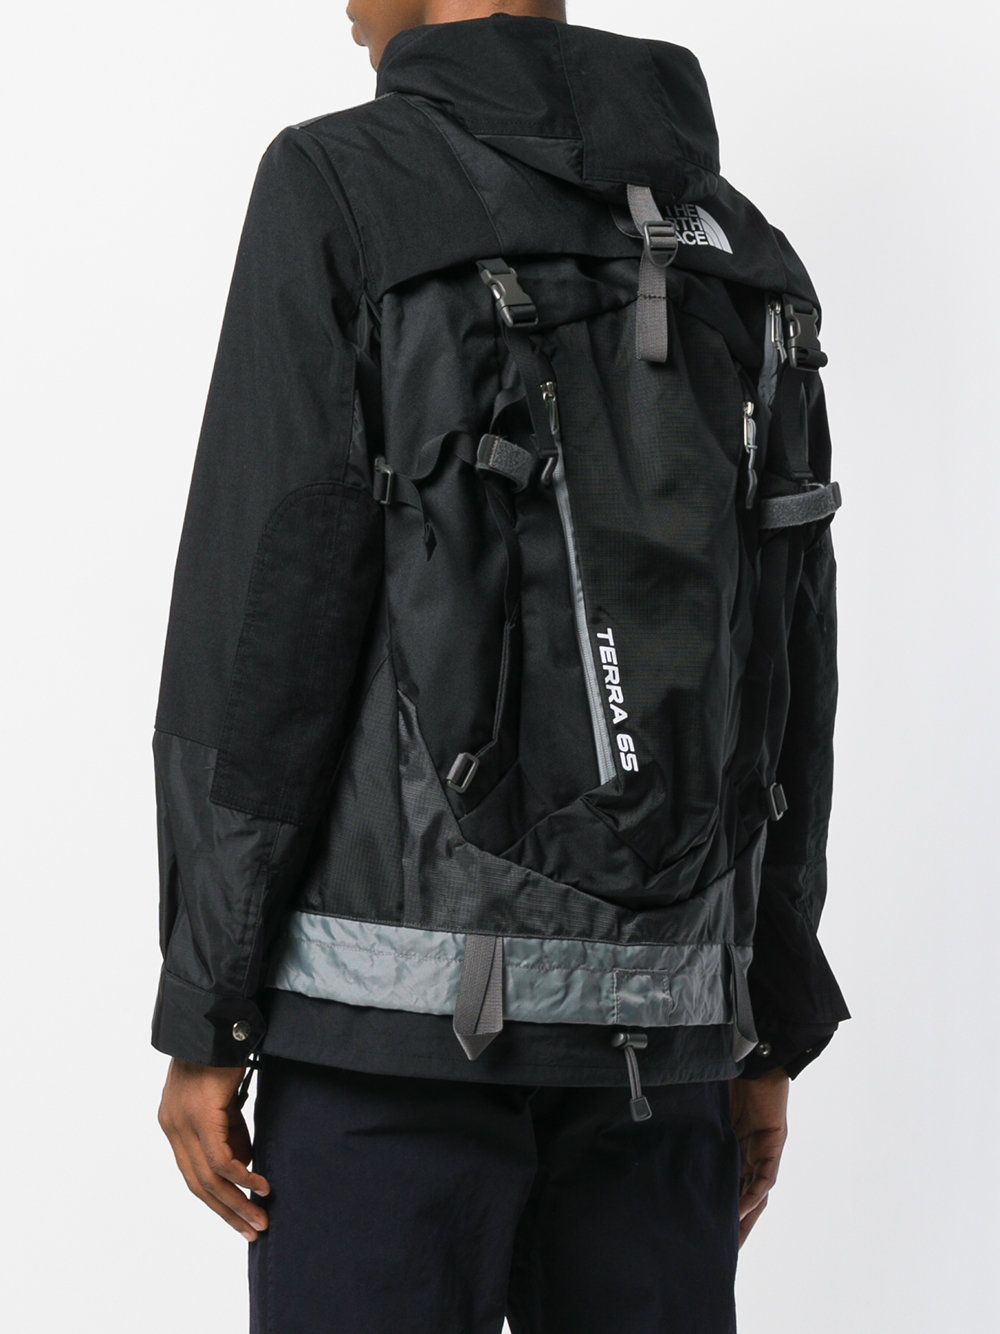 North-face-backpack-jacket-2